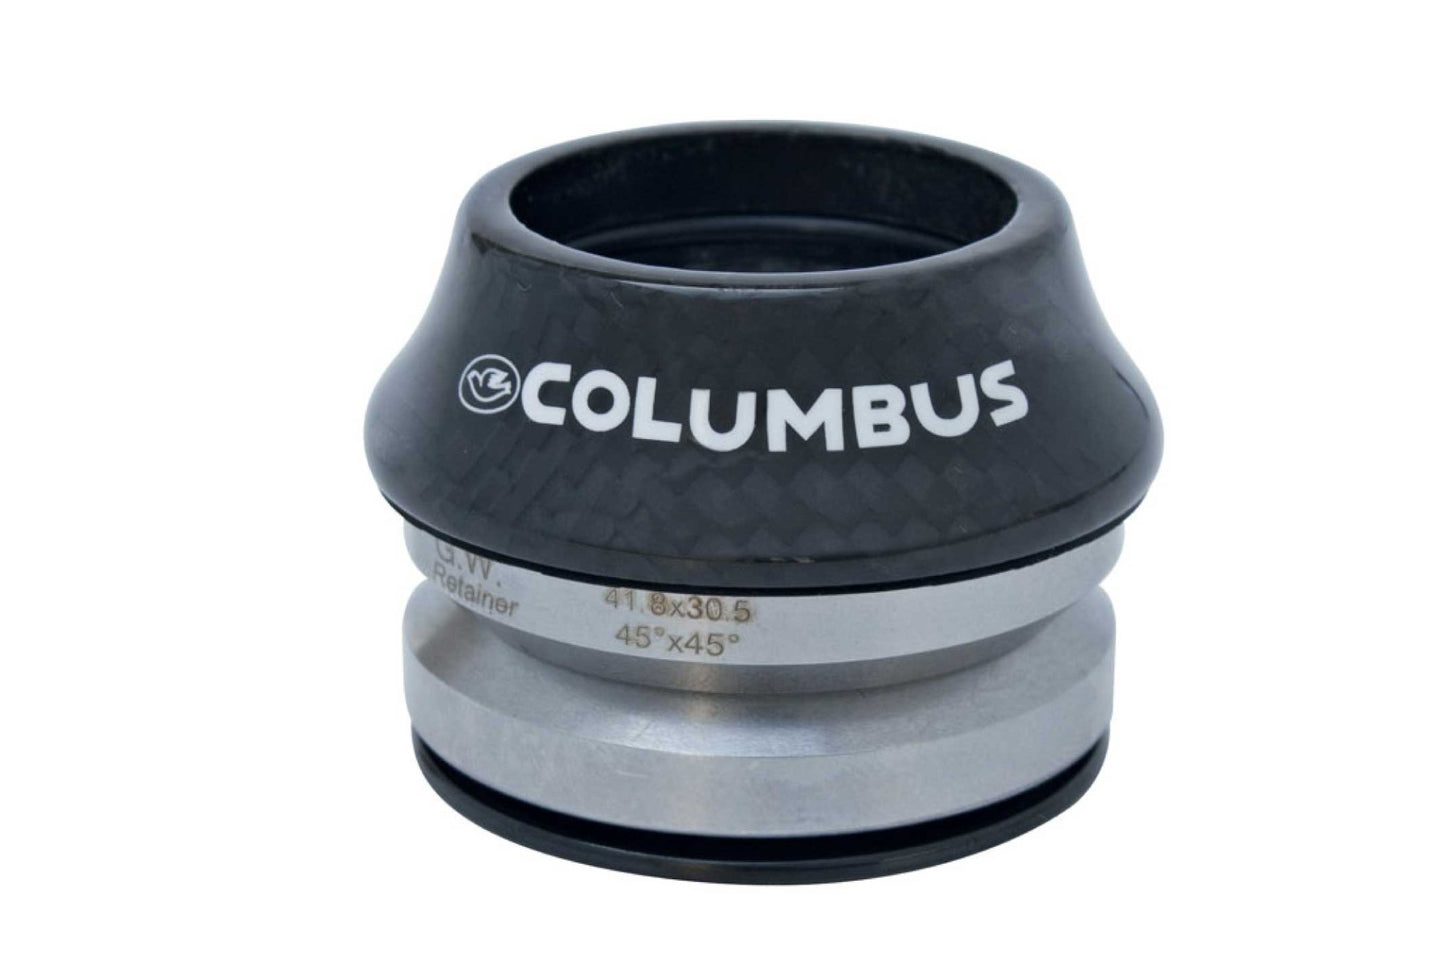 Columbus - COLUMBUS Compass Headset - FISHTAIL CYCLERY